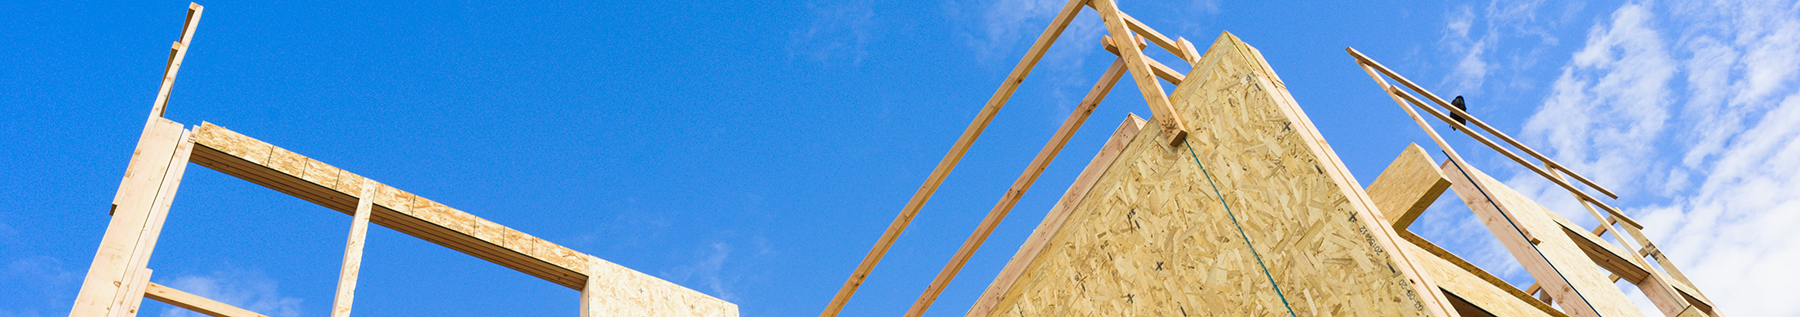 wood construction against blue sky